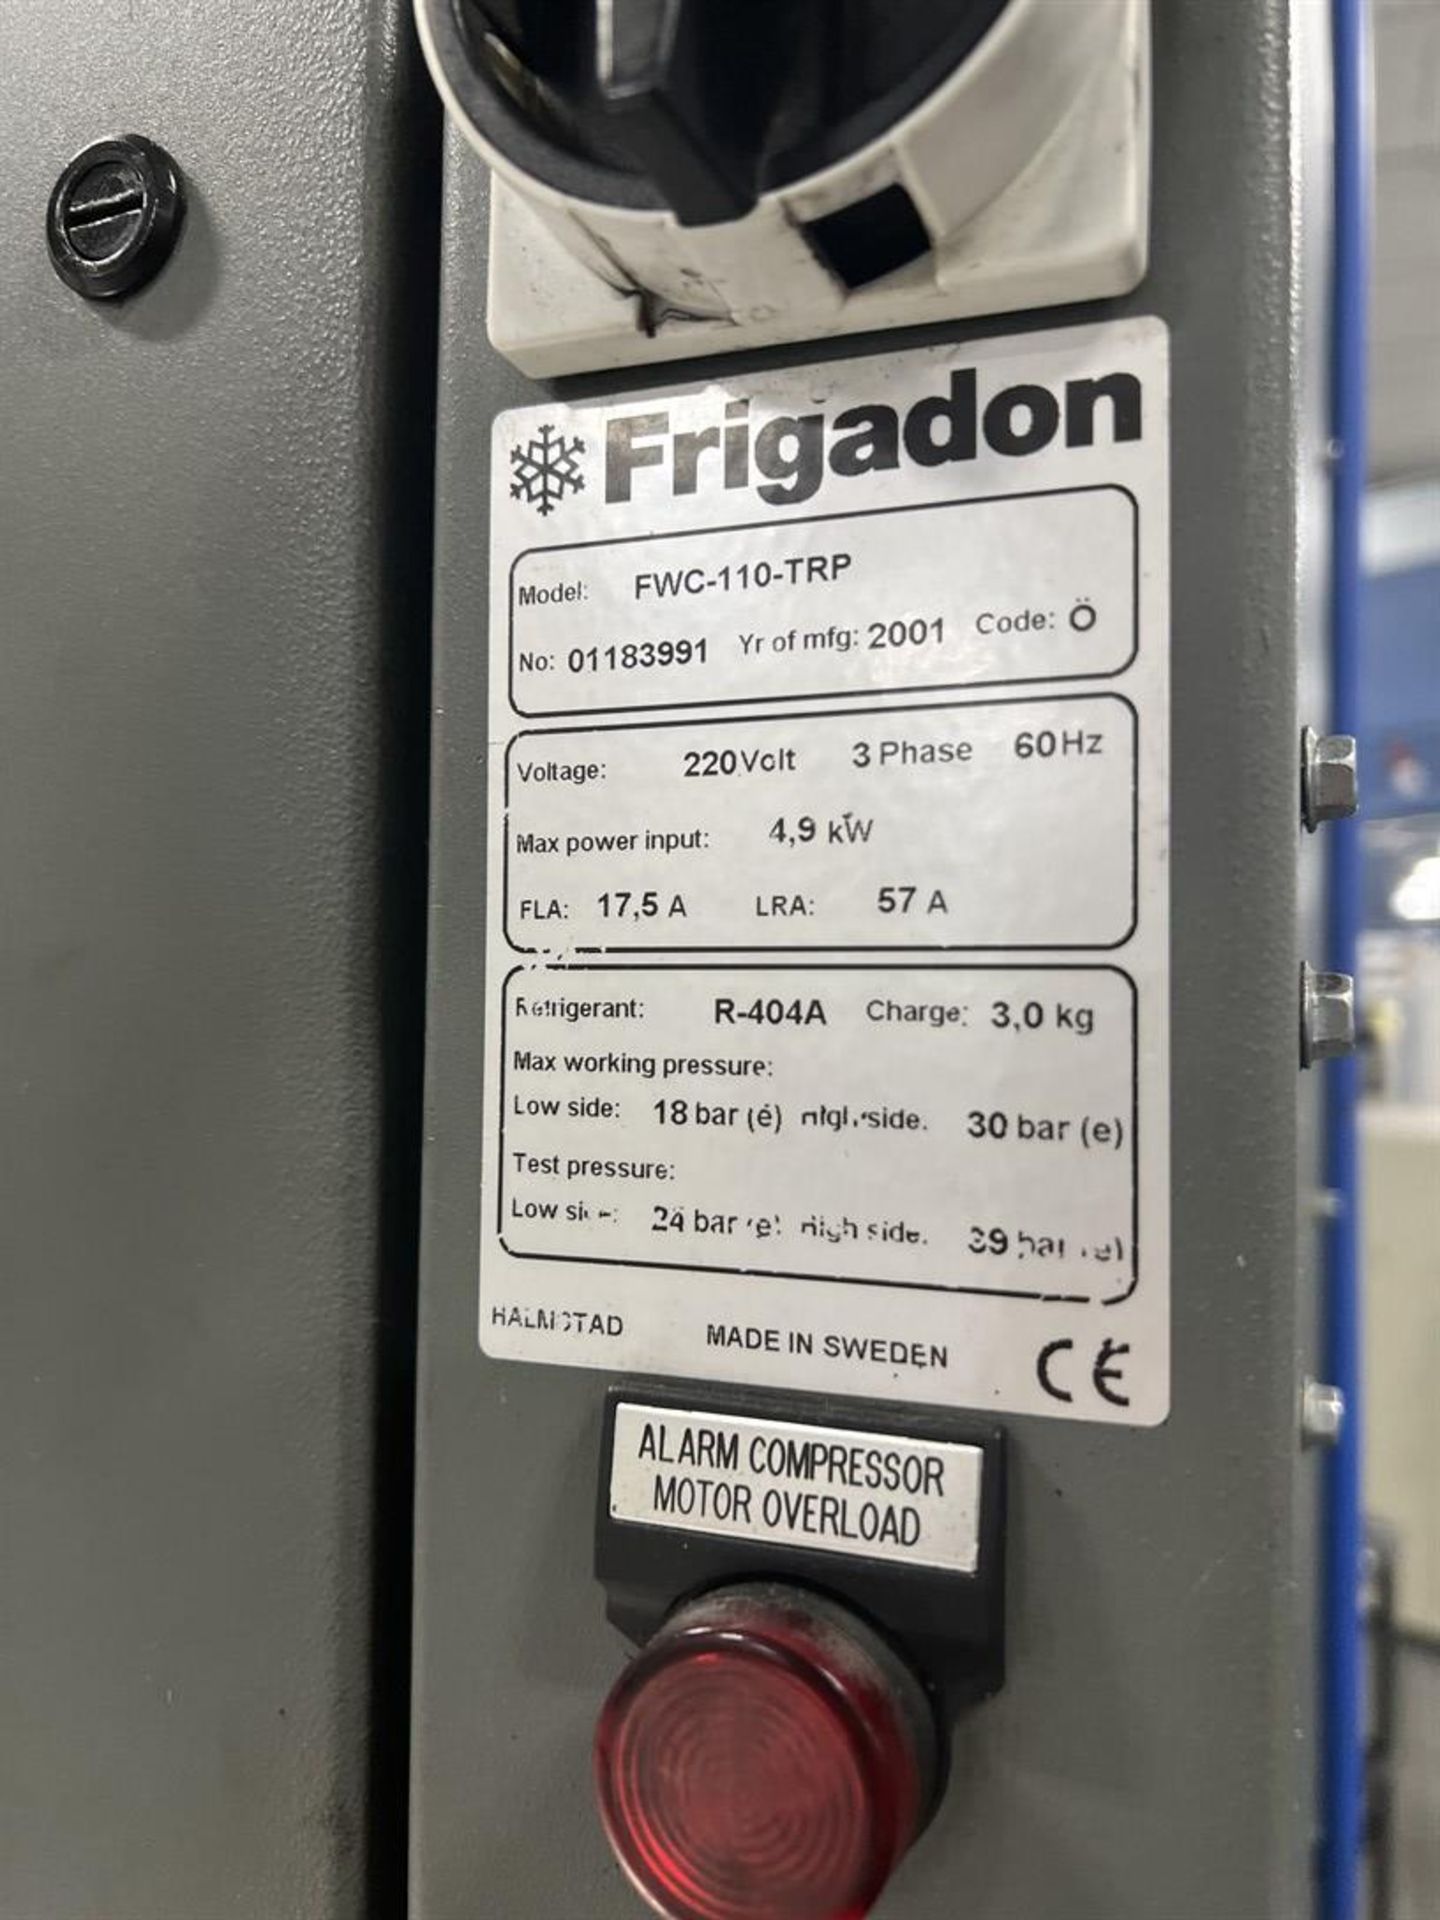 2001 FRIGADON FWC-110-TRP Chiller System, s/n 01183991 - Image 4 of 6